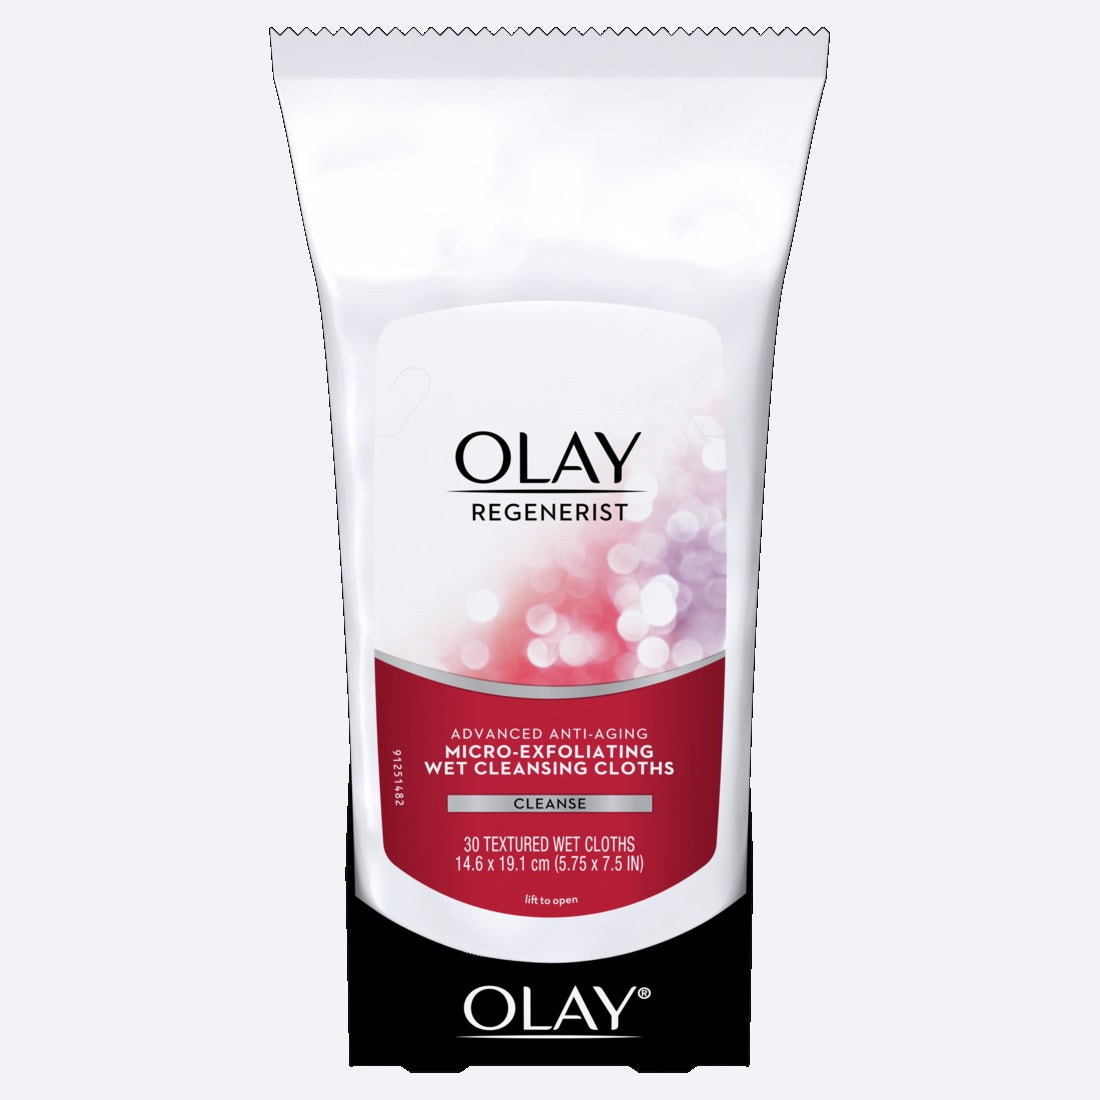 Olay Regenerist Micro-Exfoliating Wet Cleansing Cloths - 30ct/12pk